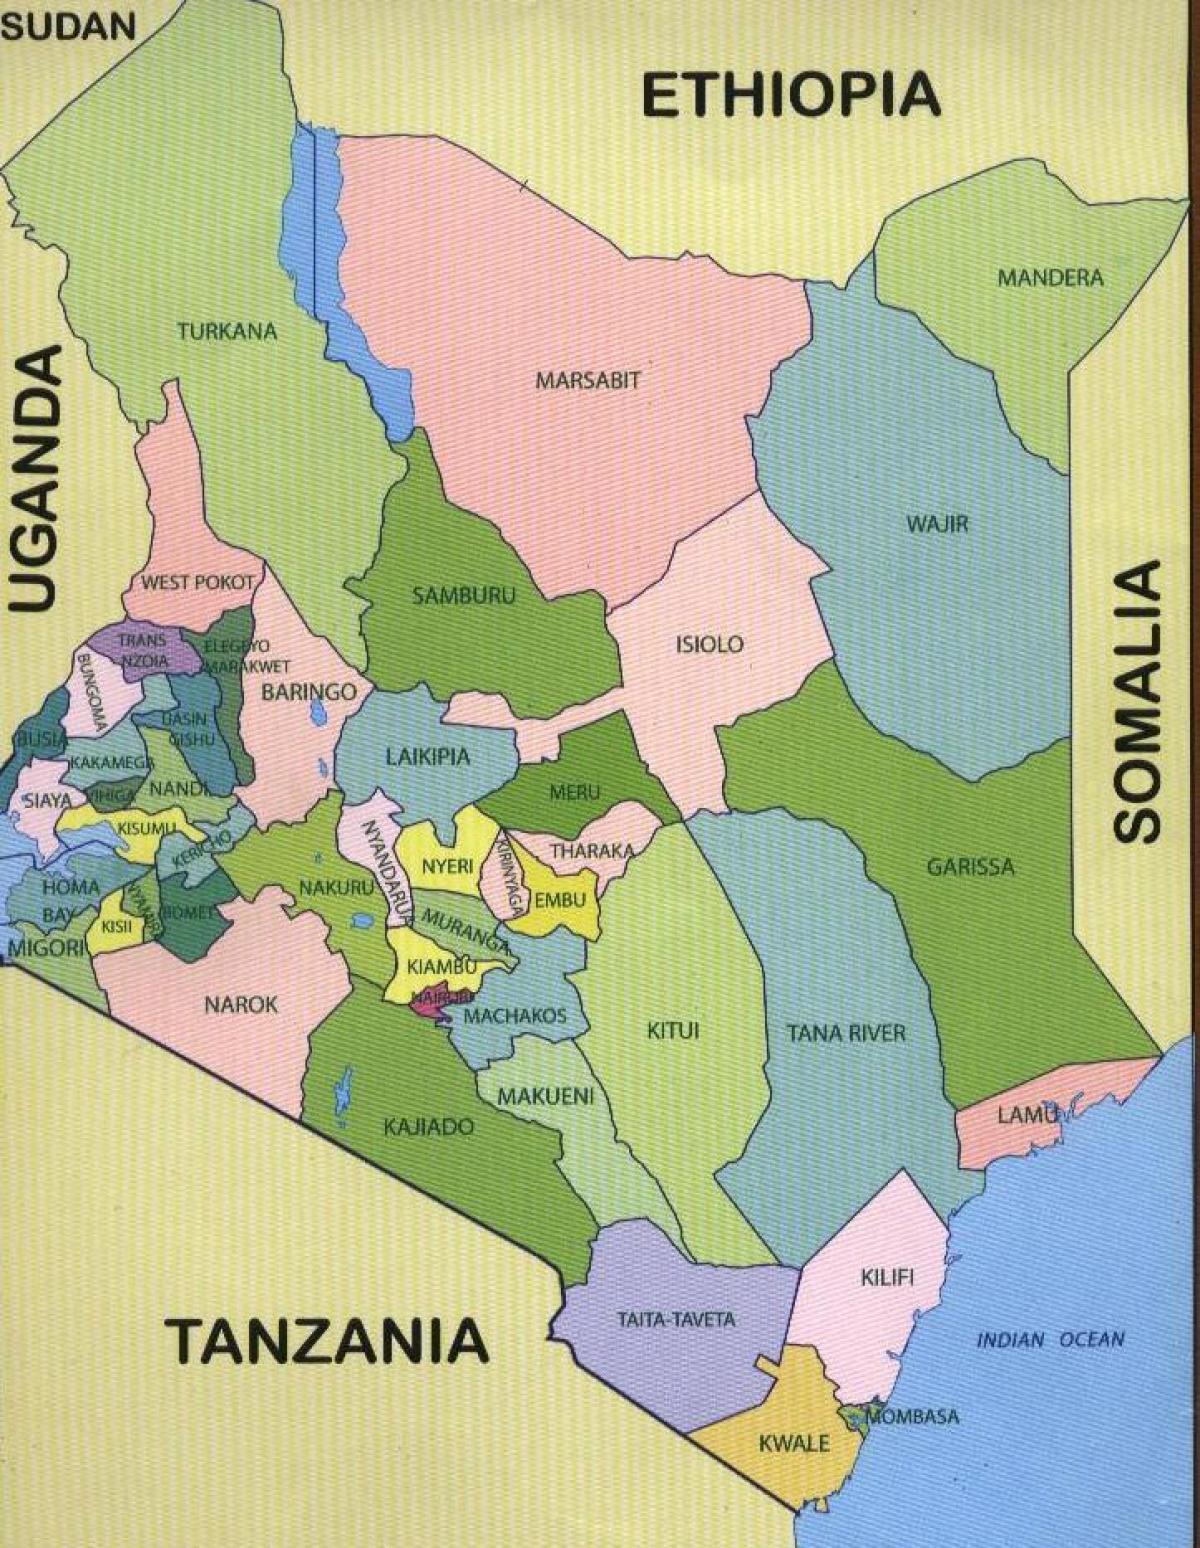 counties of Kenya map